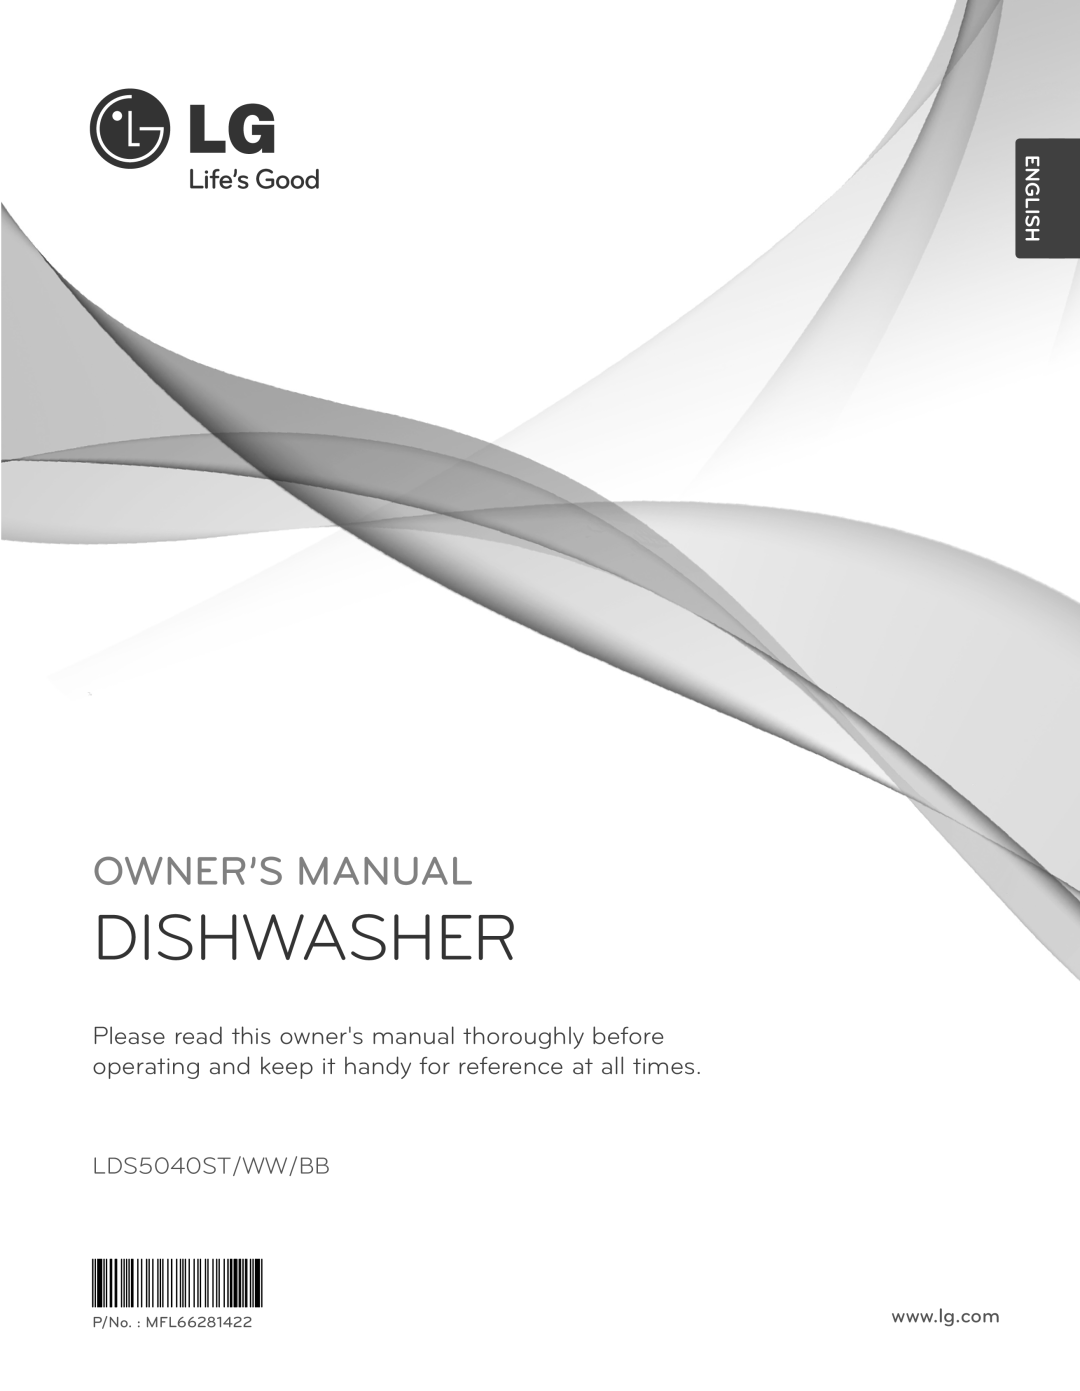 LG Electronics LDS5040BB, LDS5040WW owner manual Dishwasher, Owner’S Manual, LDS5040ST/WW/BB, English, P/No. : MFL66281422 